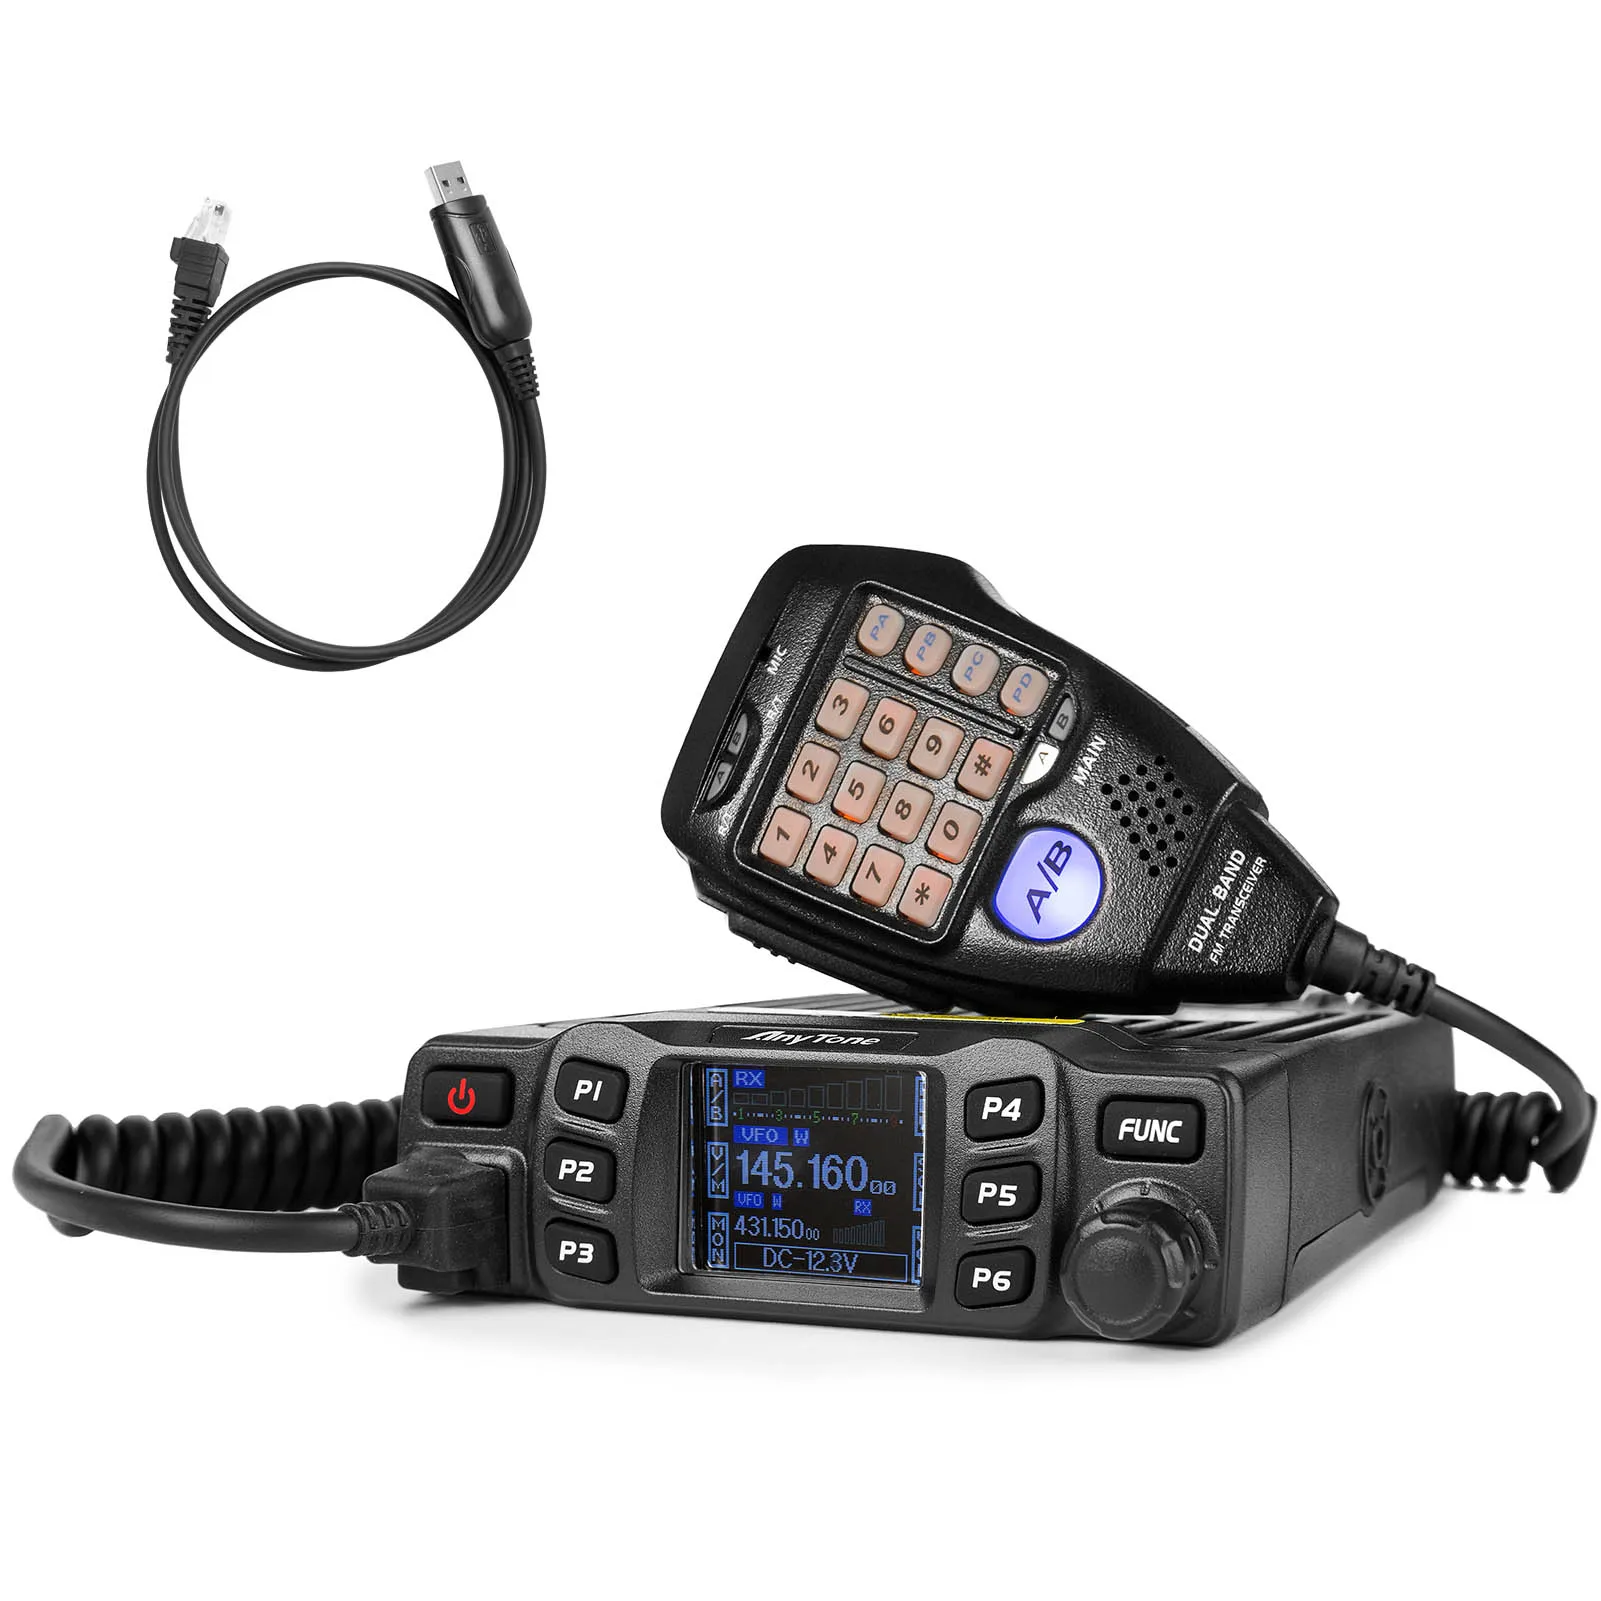 

VOX Amateur(HAM) 25W Mini Car Transceiver Support CHIRP AnyTone Mobile Radio